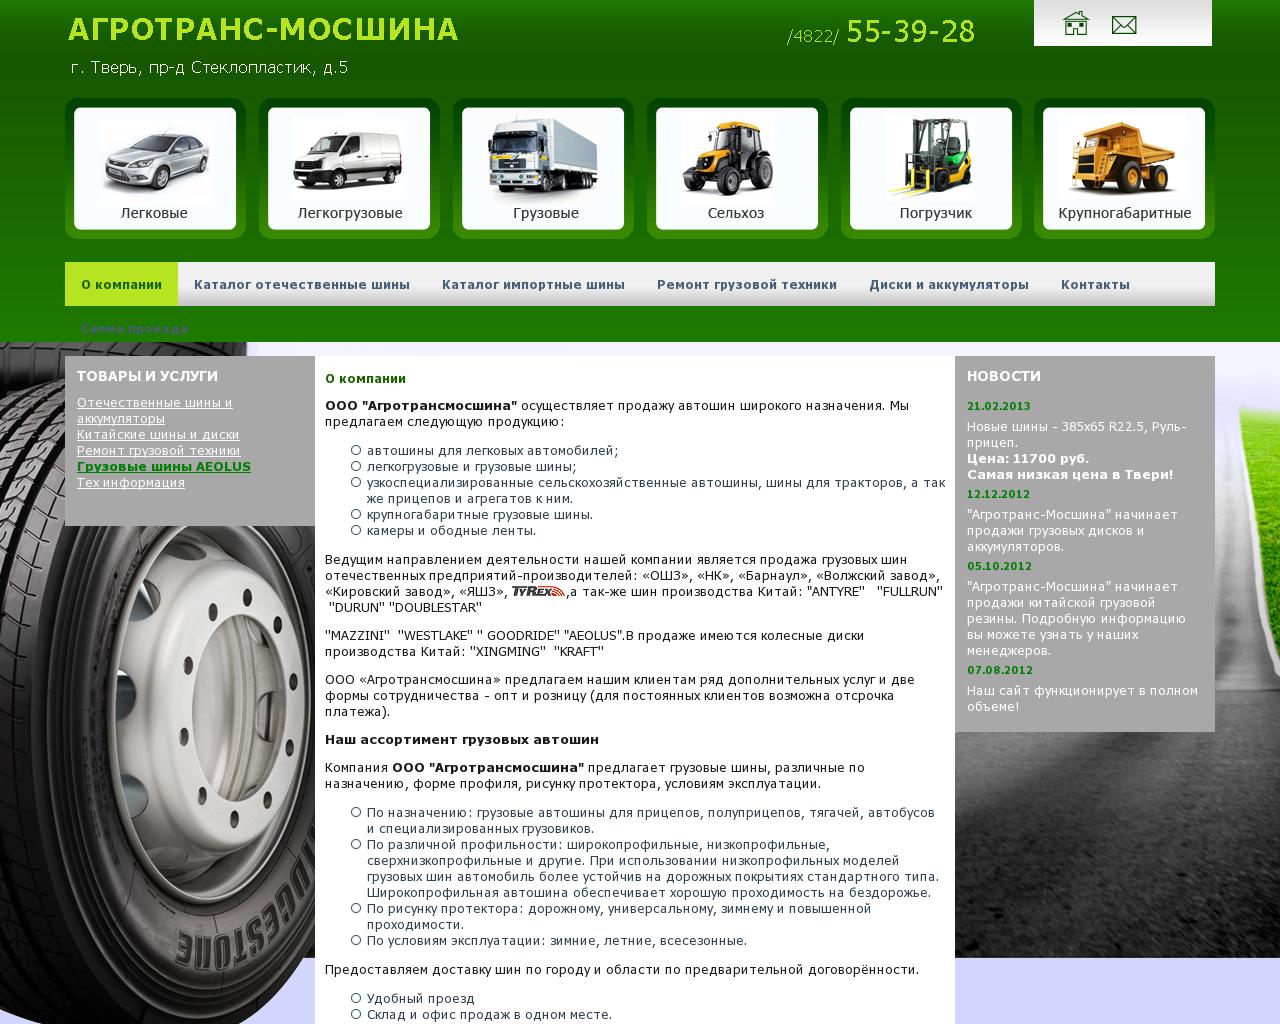 Изображение сайта agrotrans-mosshina.ru в разрешении 1280x1024